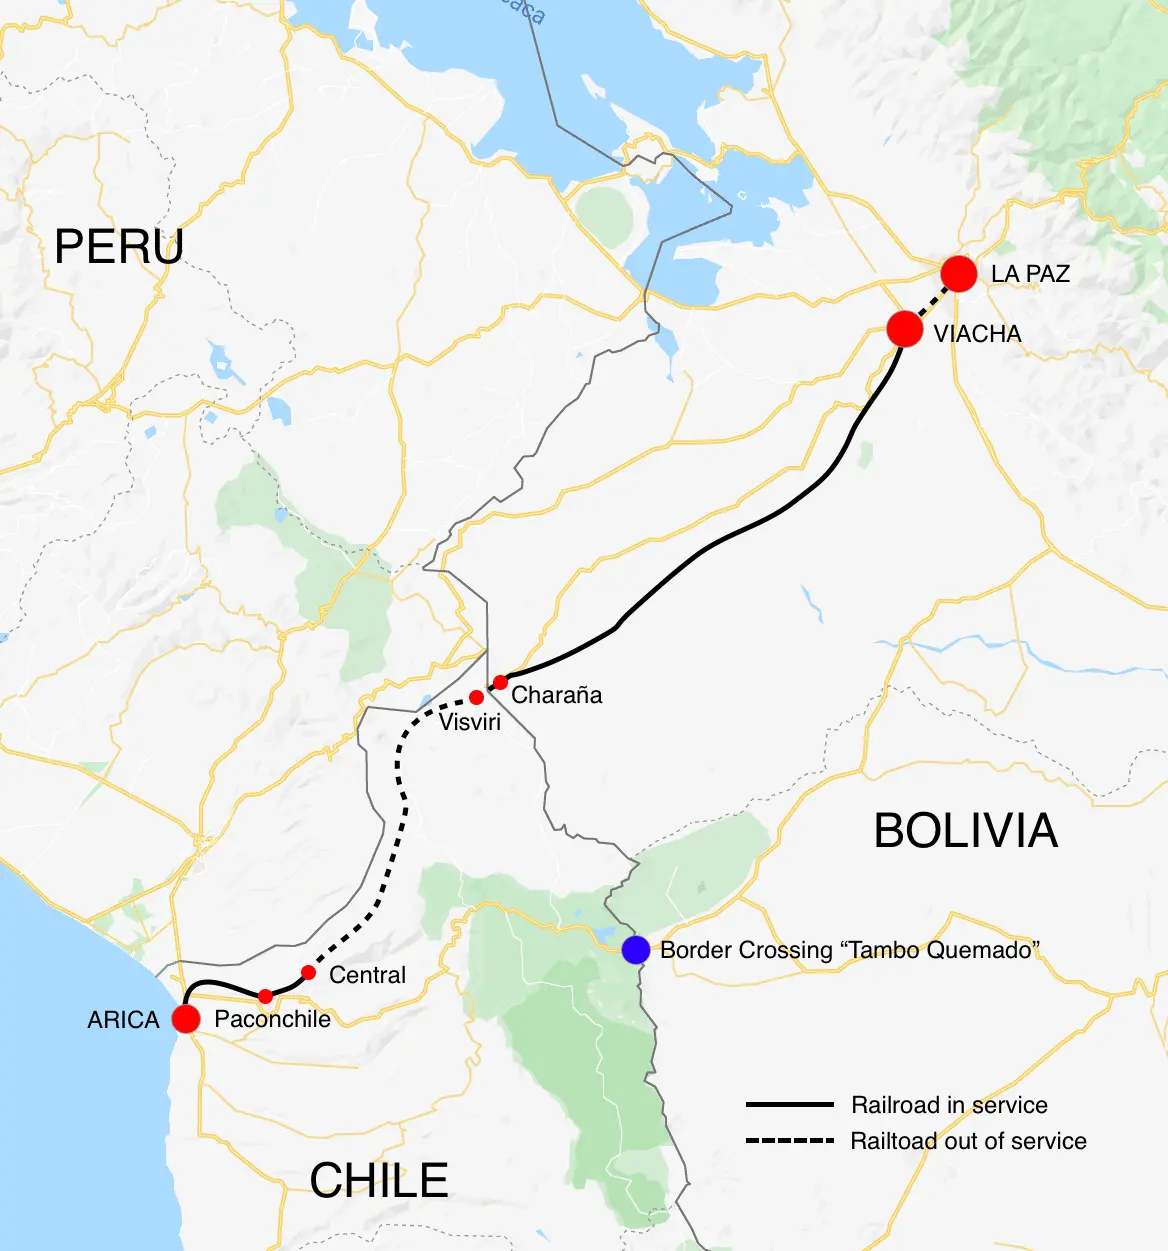 ferrocarril de arica a la paz - Qué ciudades conecta el ferrocarril Arica La Paz